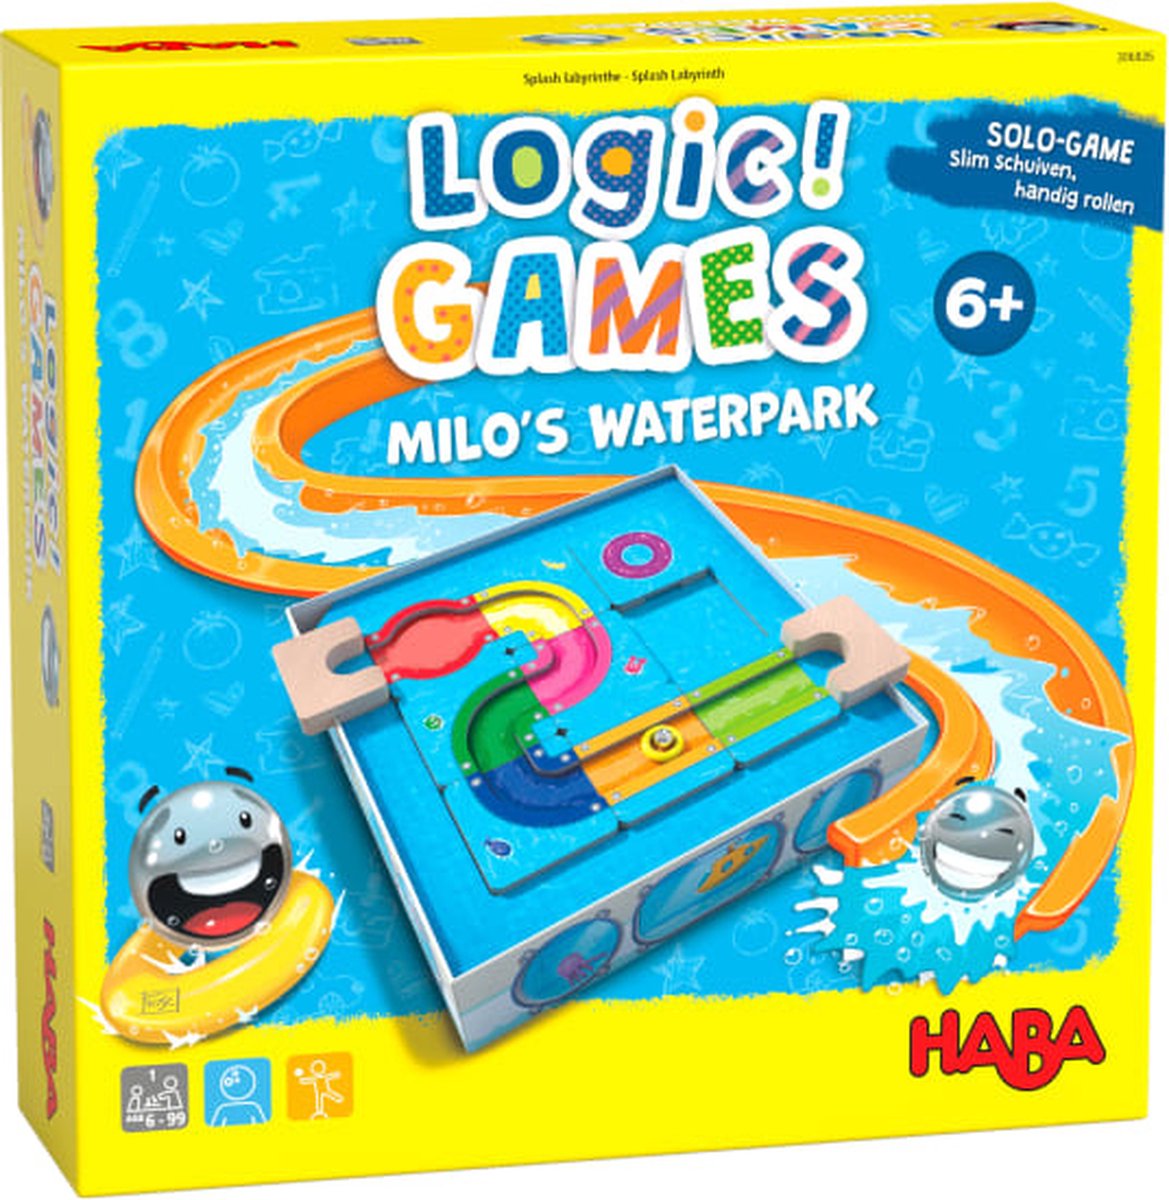 Logic! GAMES - Milos waterpark -   spel [6 jaar +]